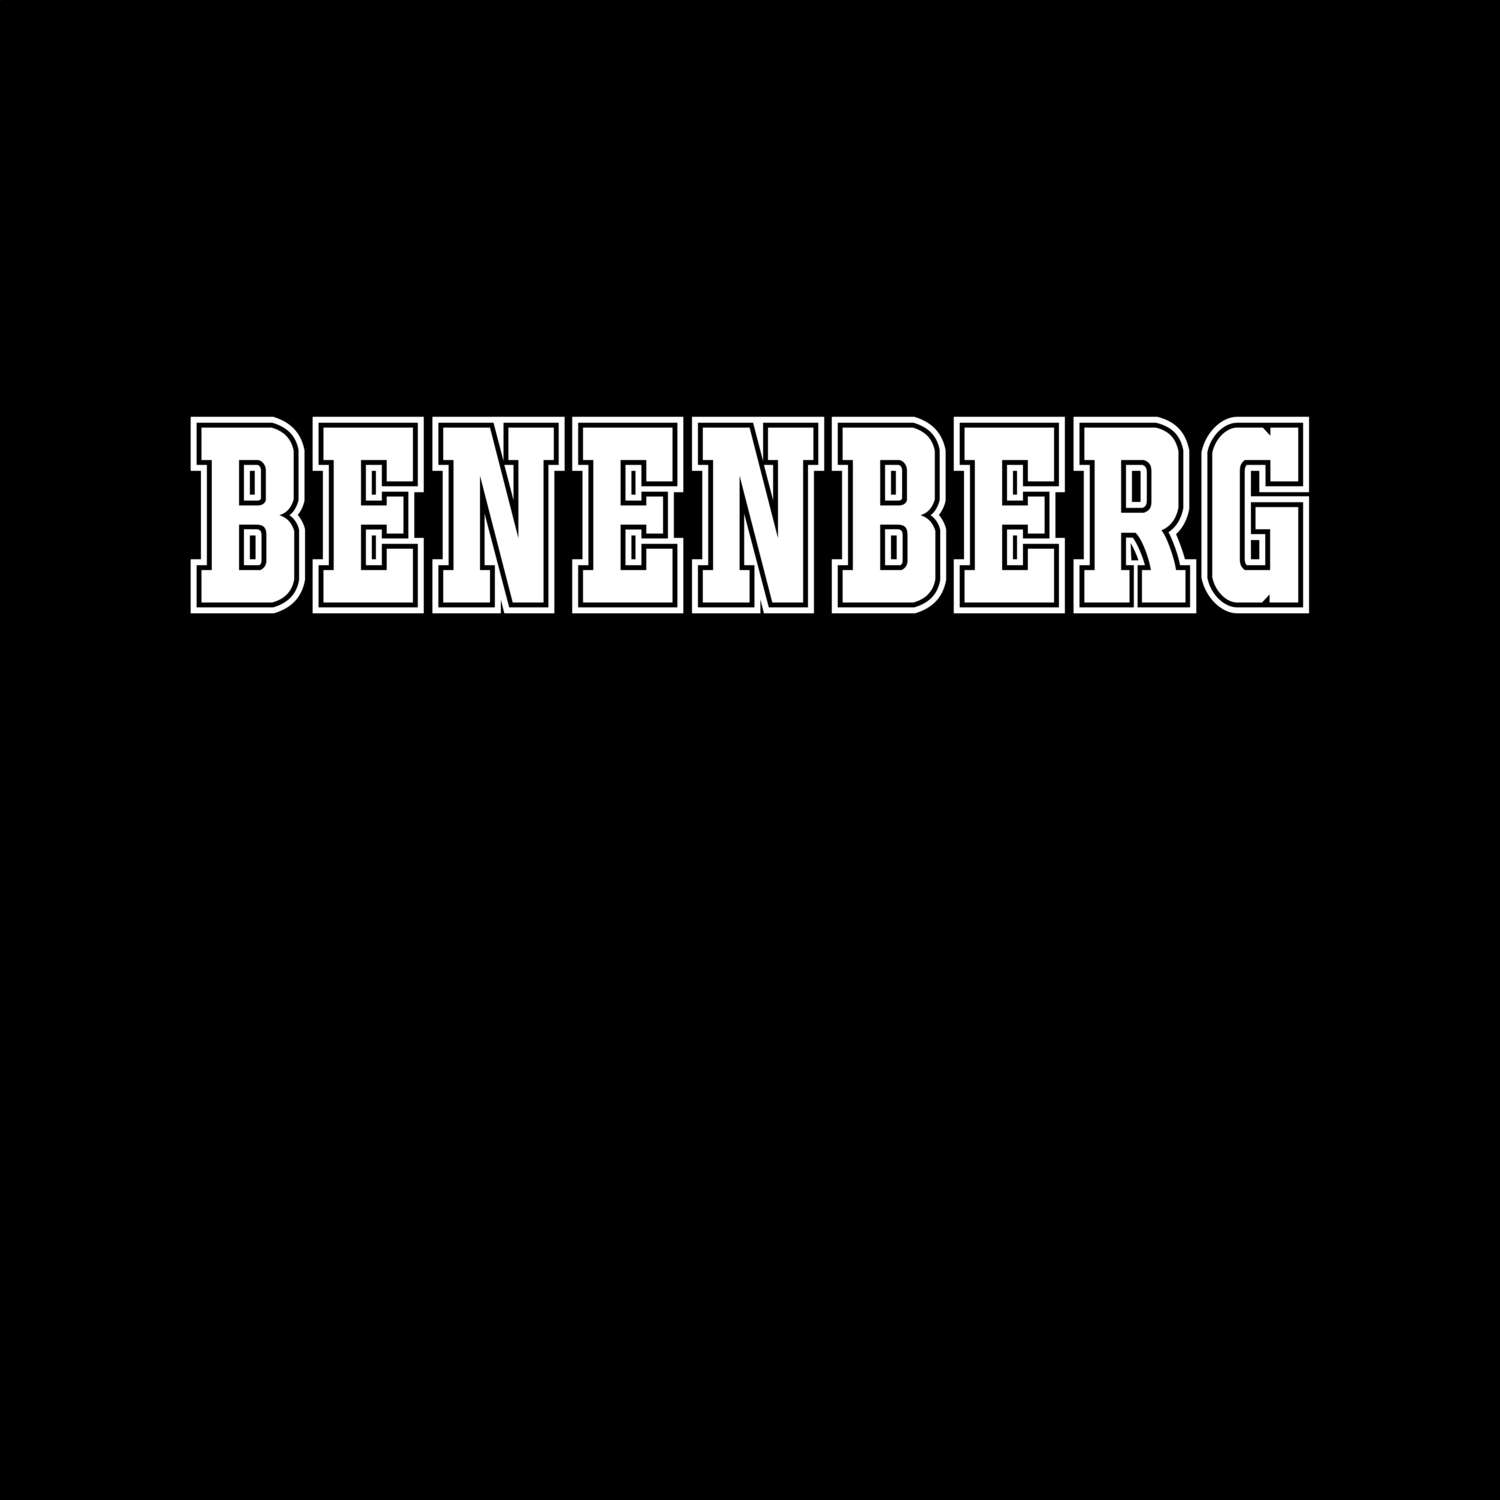 Benenberg T-Shirt »Classic«